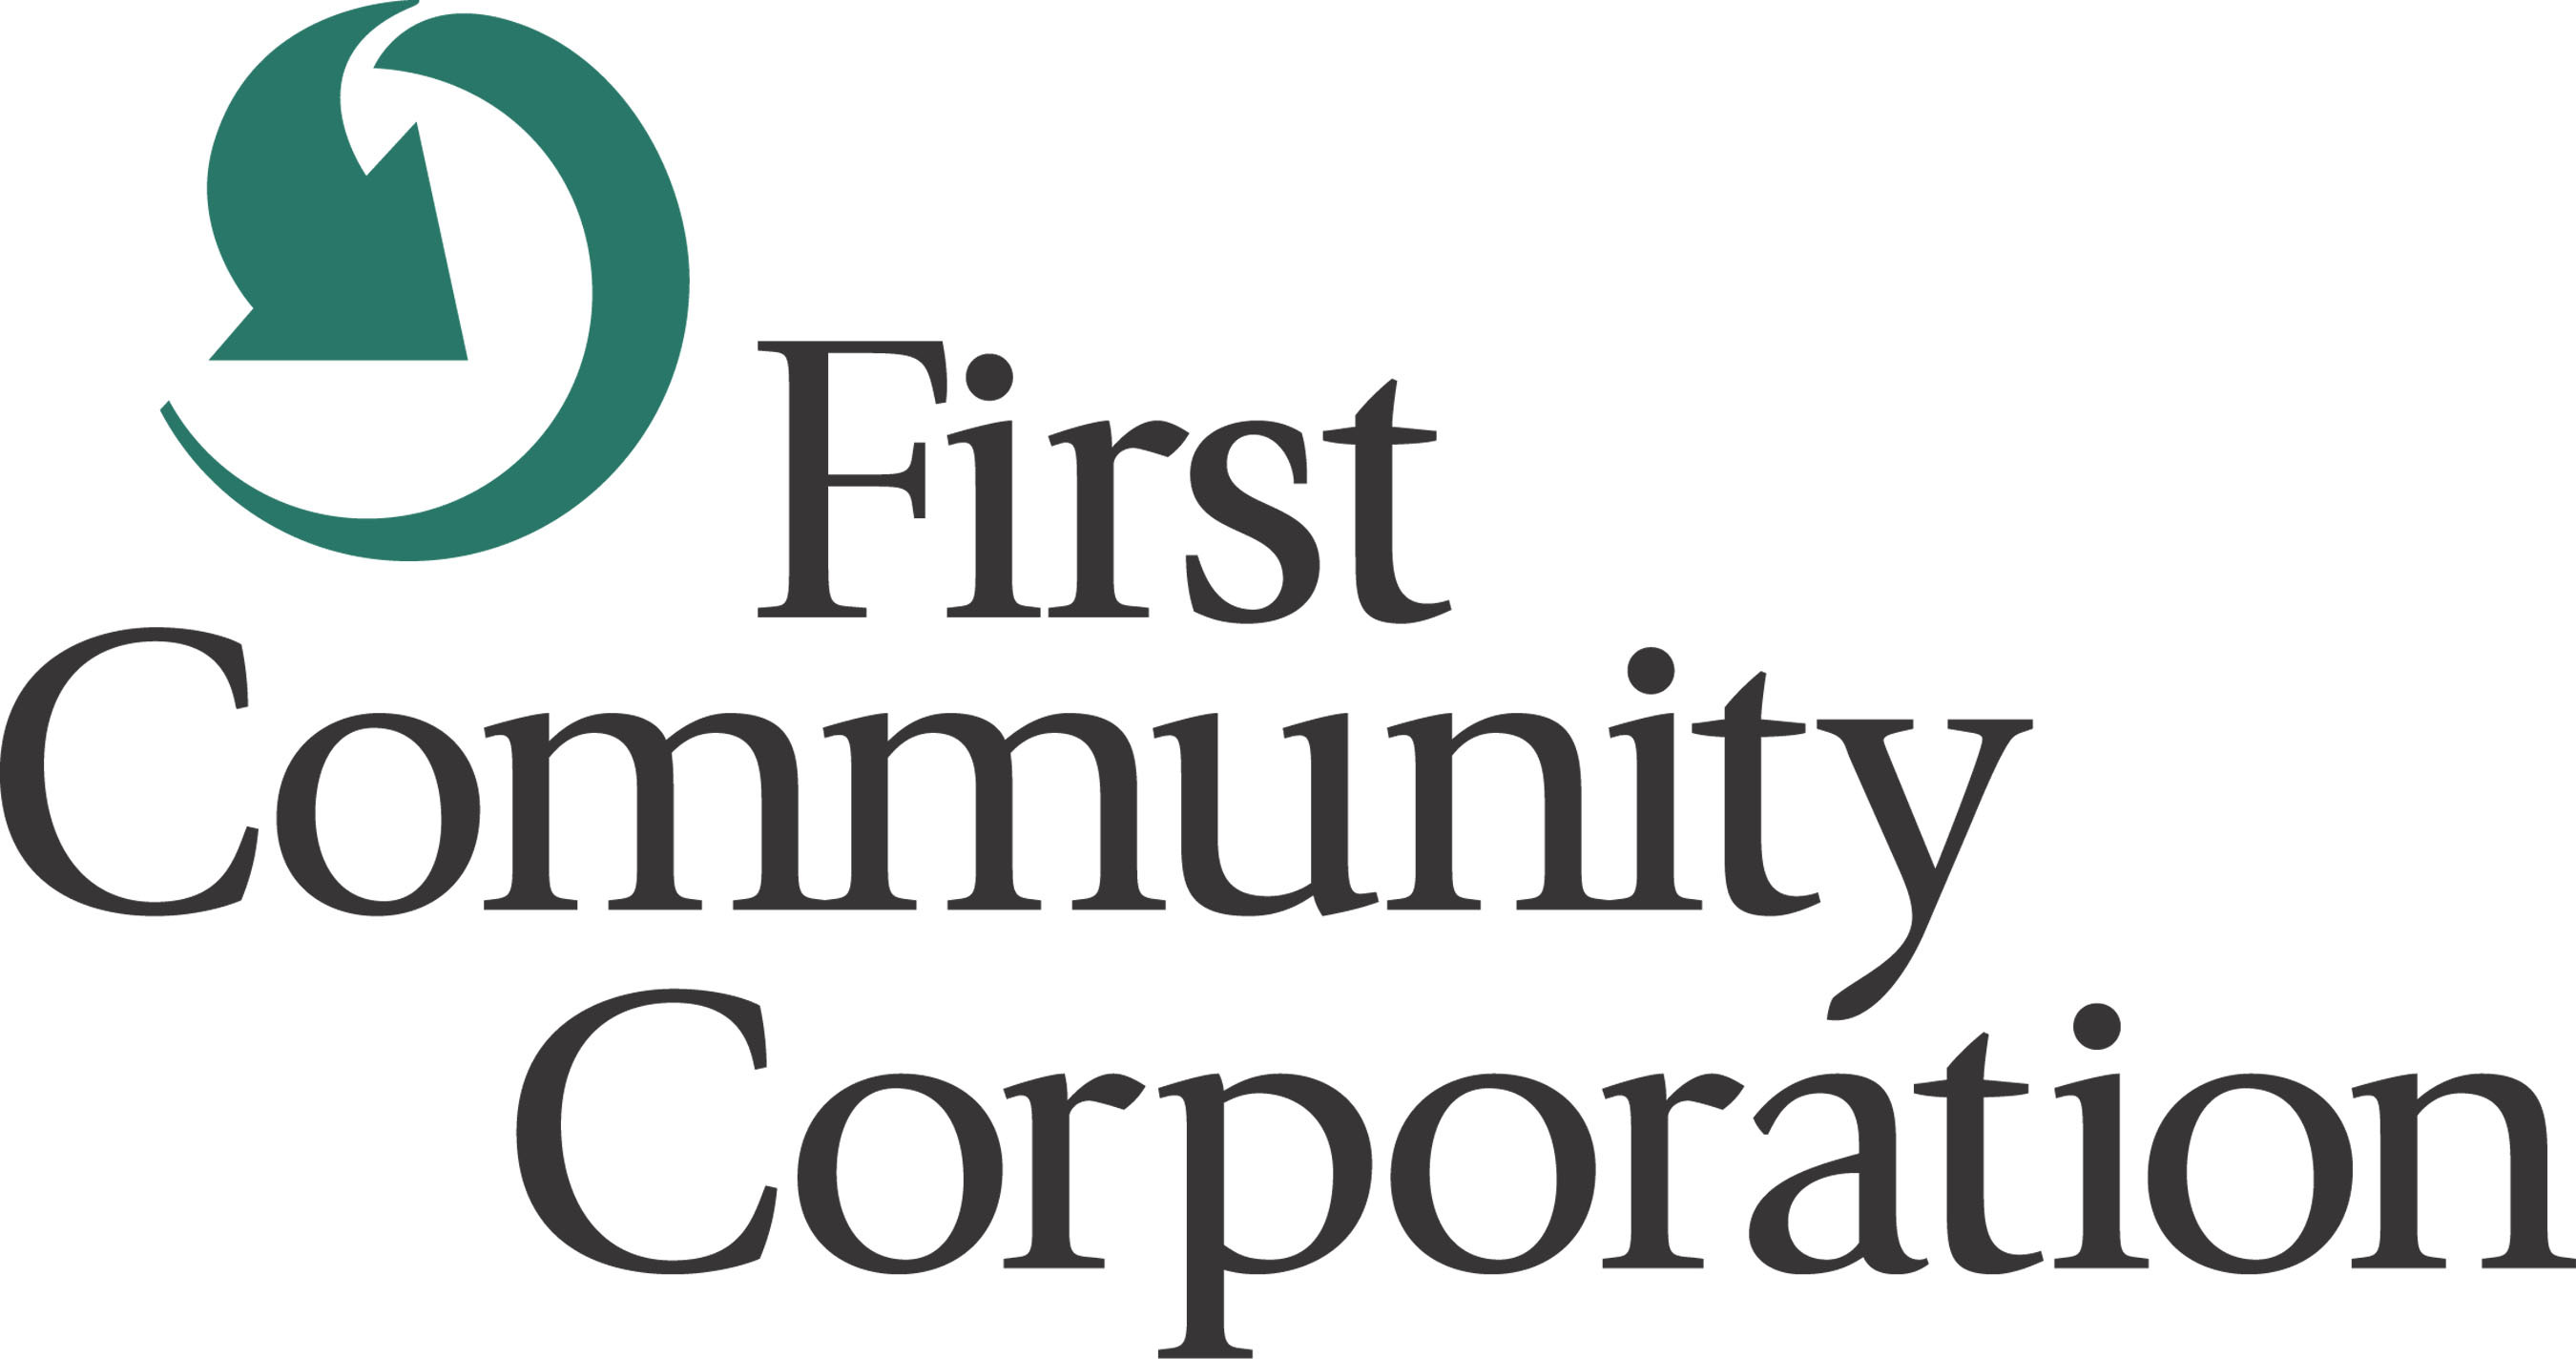 First Community Corporation logo